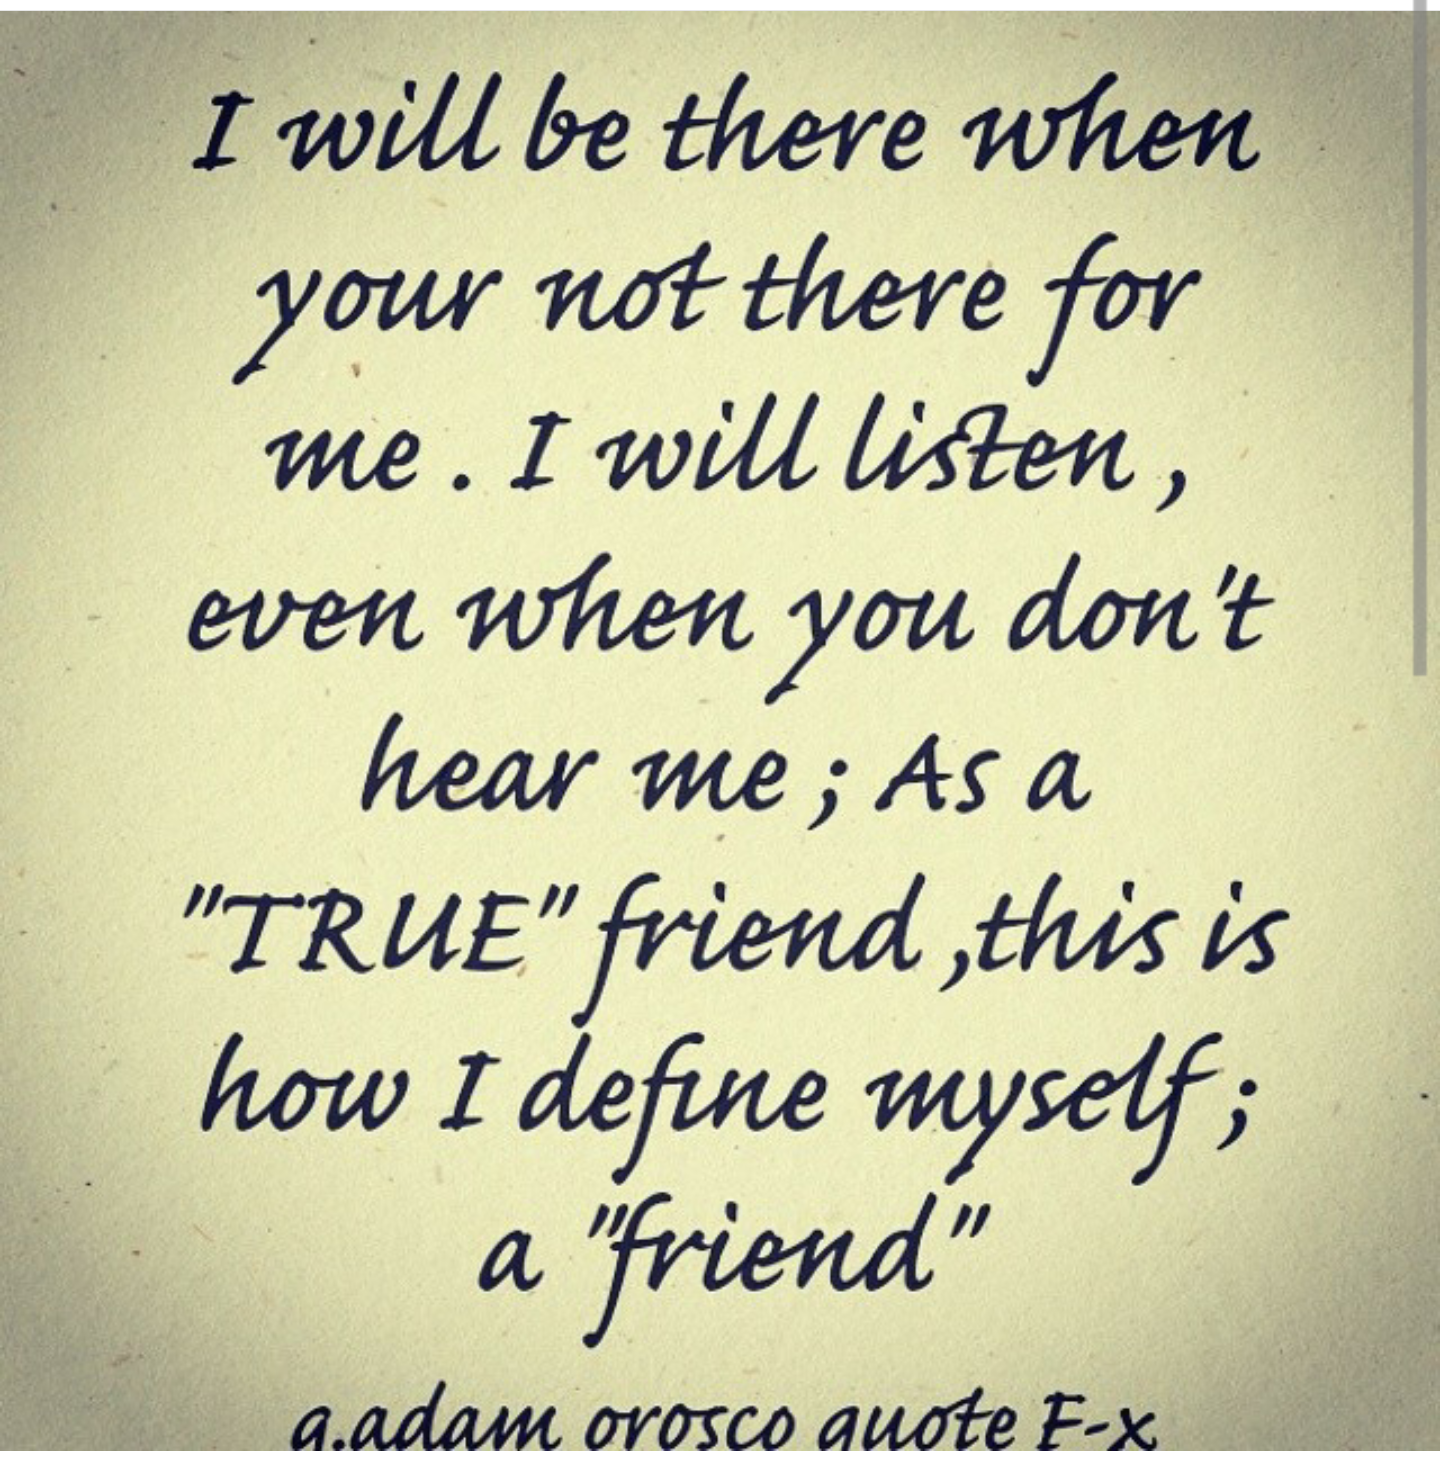 definition of a true friend fx by artwithoutabrushfx on deviantart